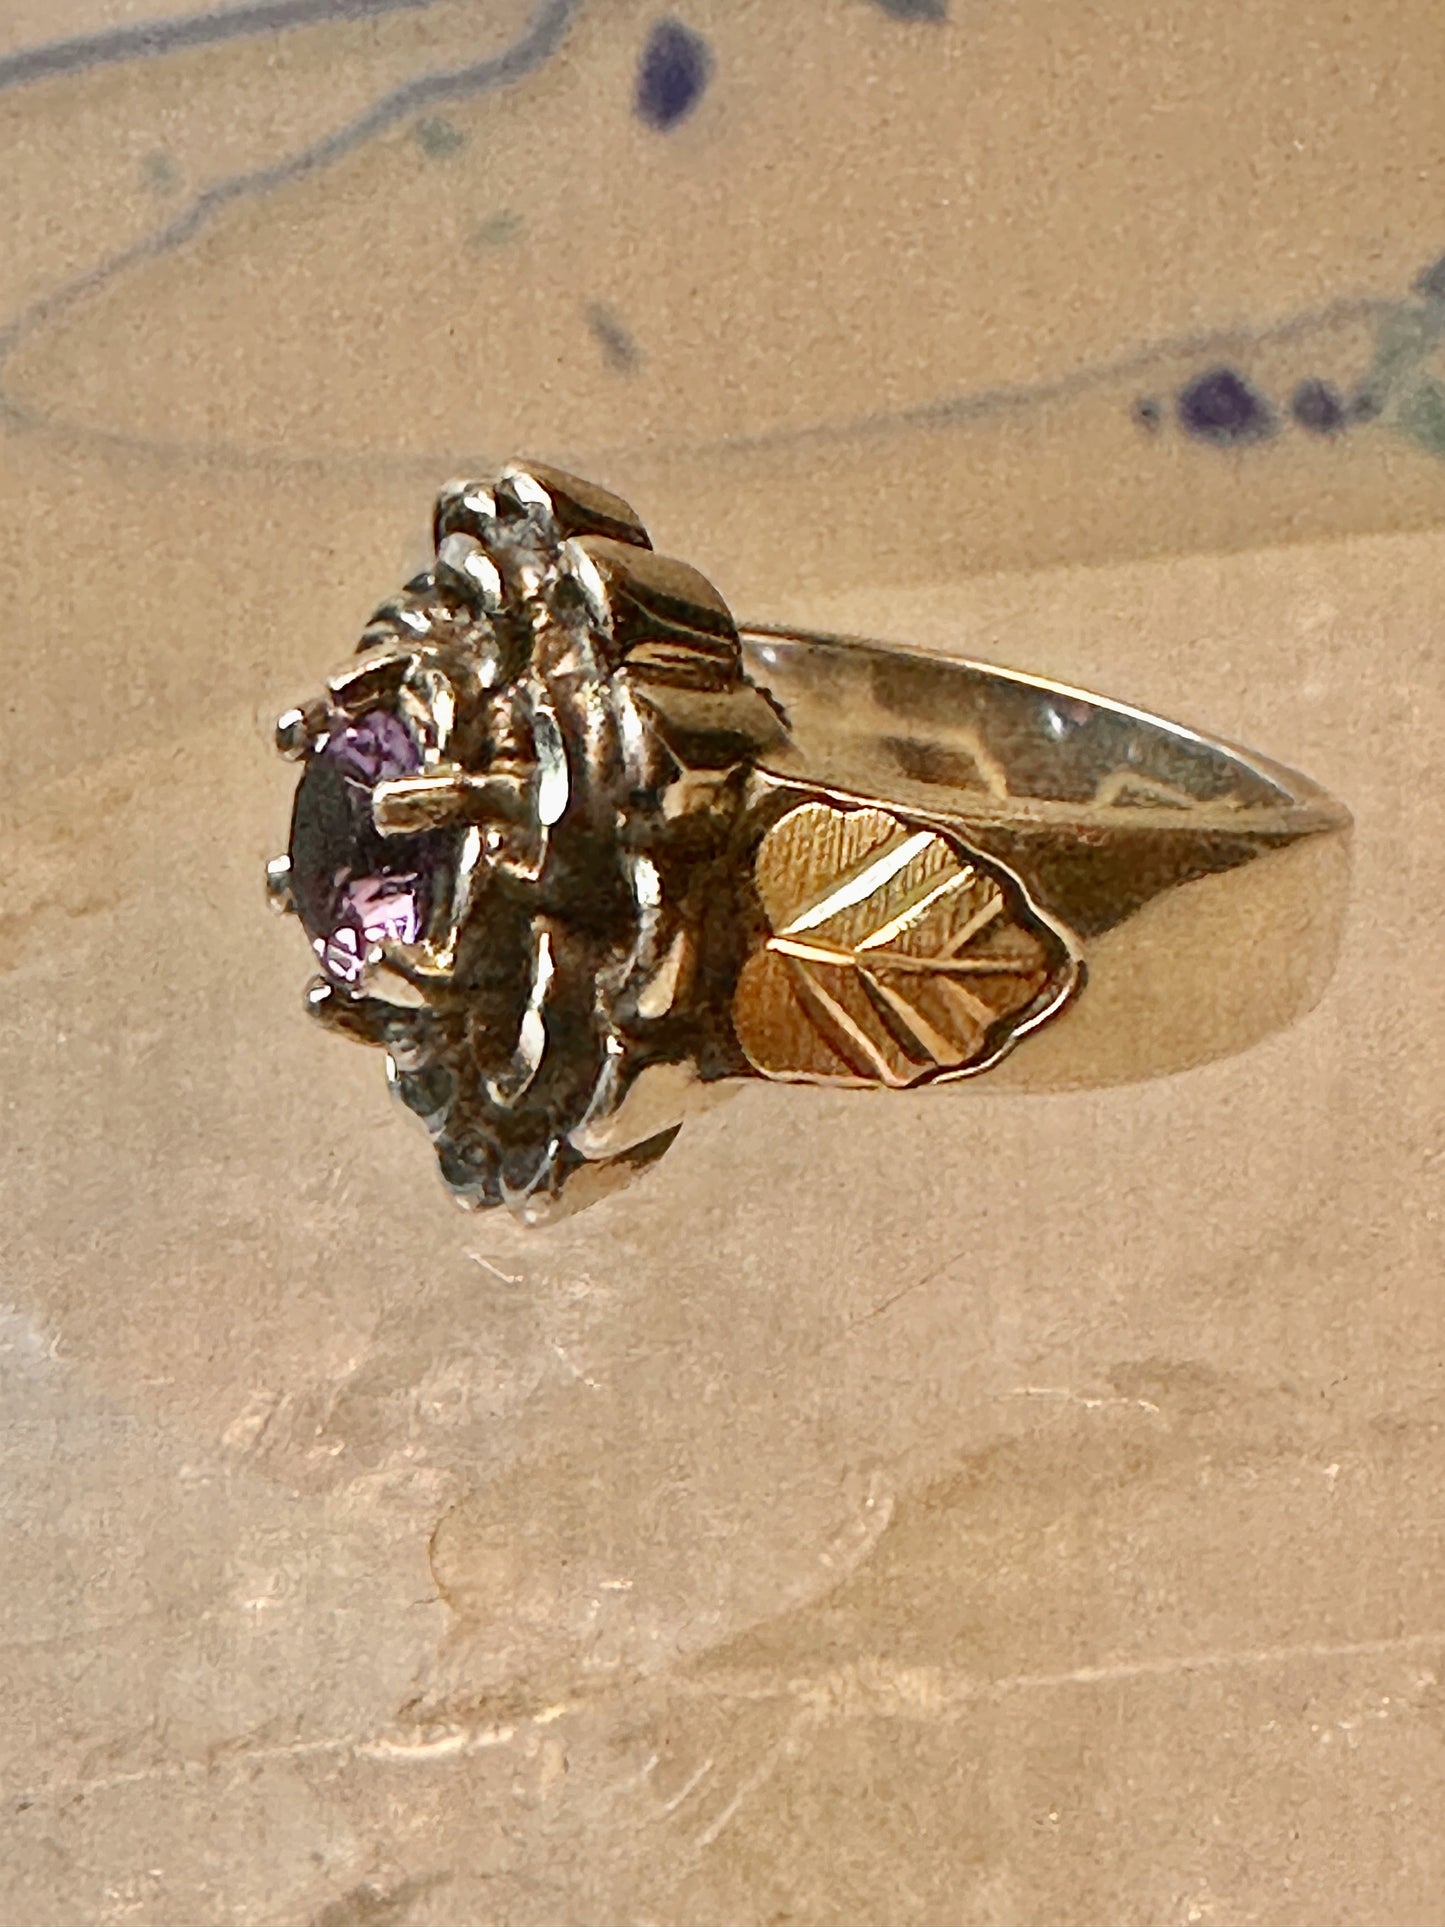 Black Hills Gold ring size 5 Flower Amethyst leaves band women